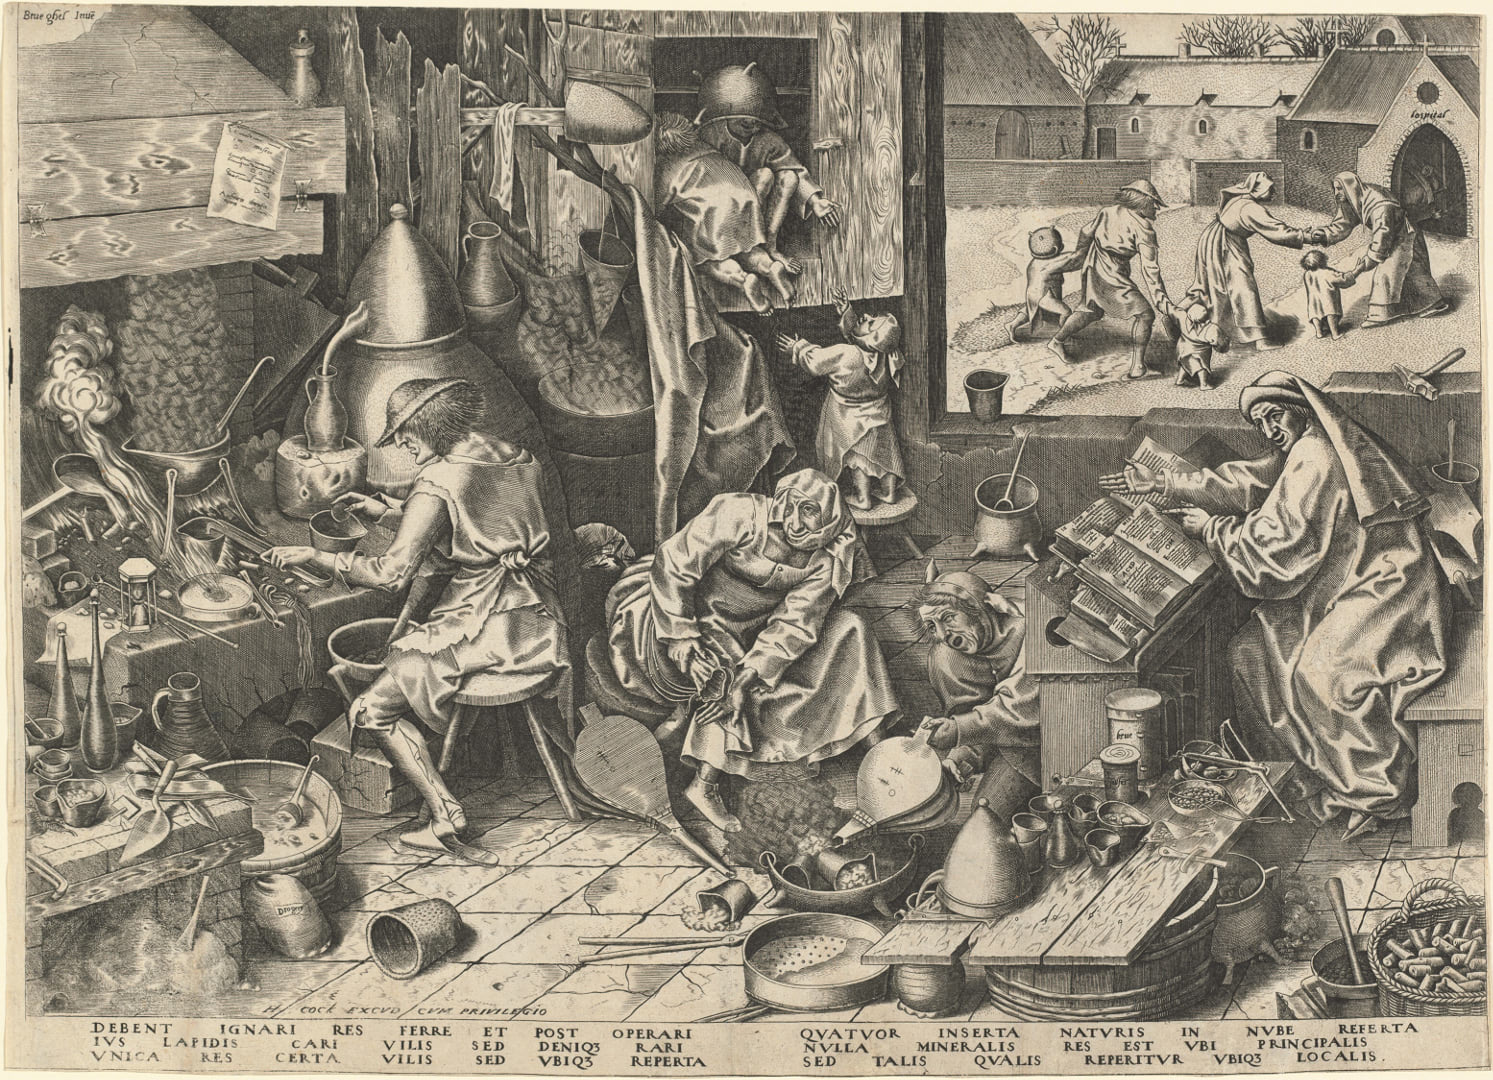 The Alchemist by Pieter Bruegel the Elder, National Gallery of Art, Washington, D.C.